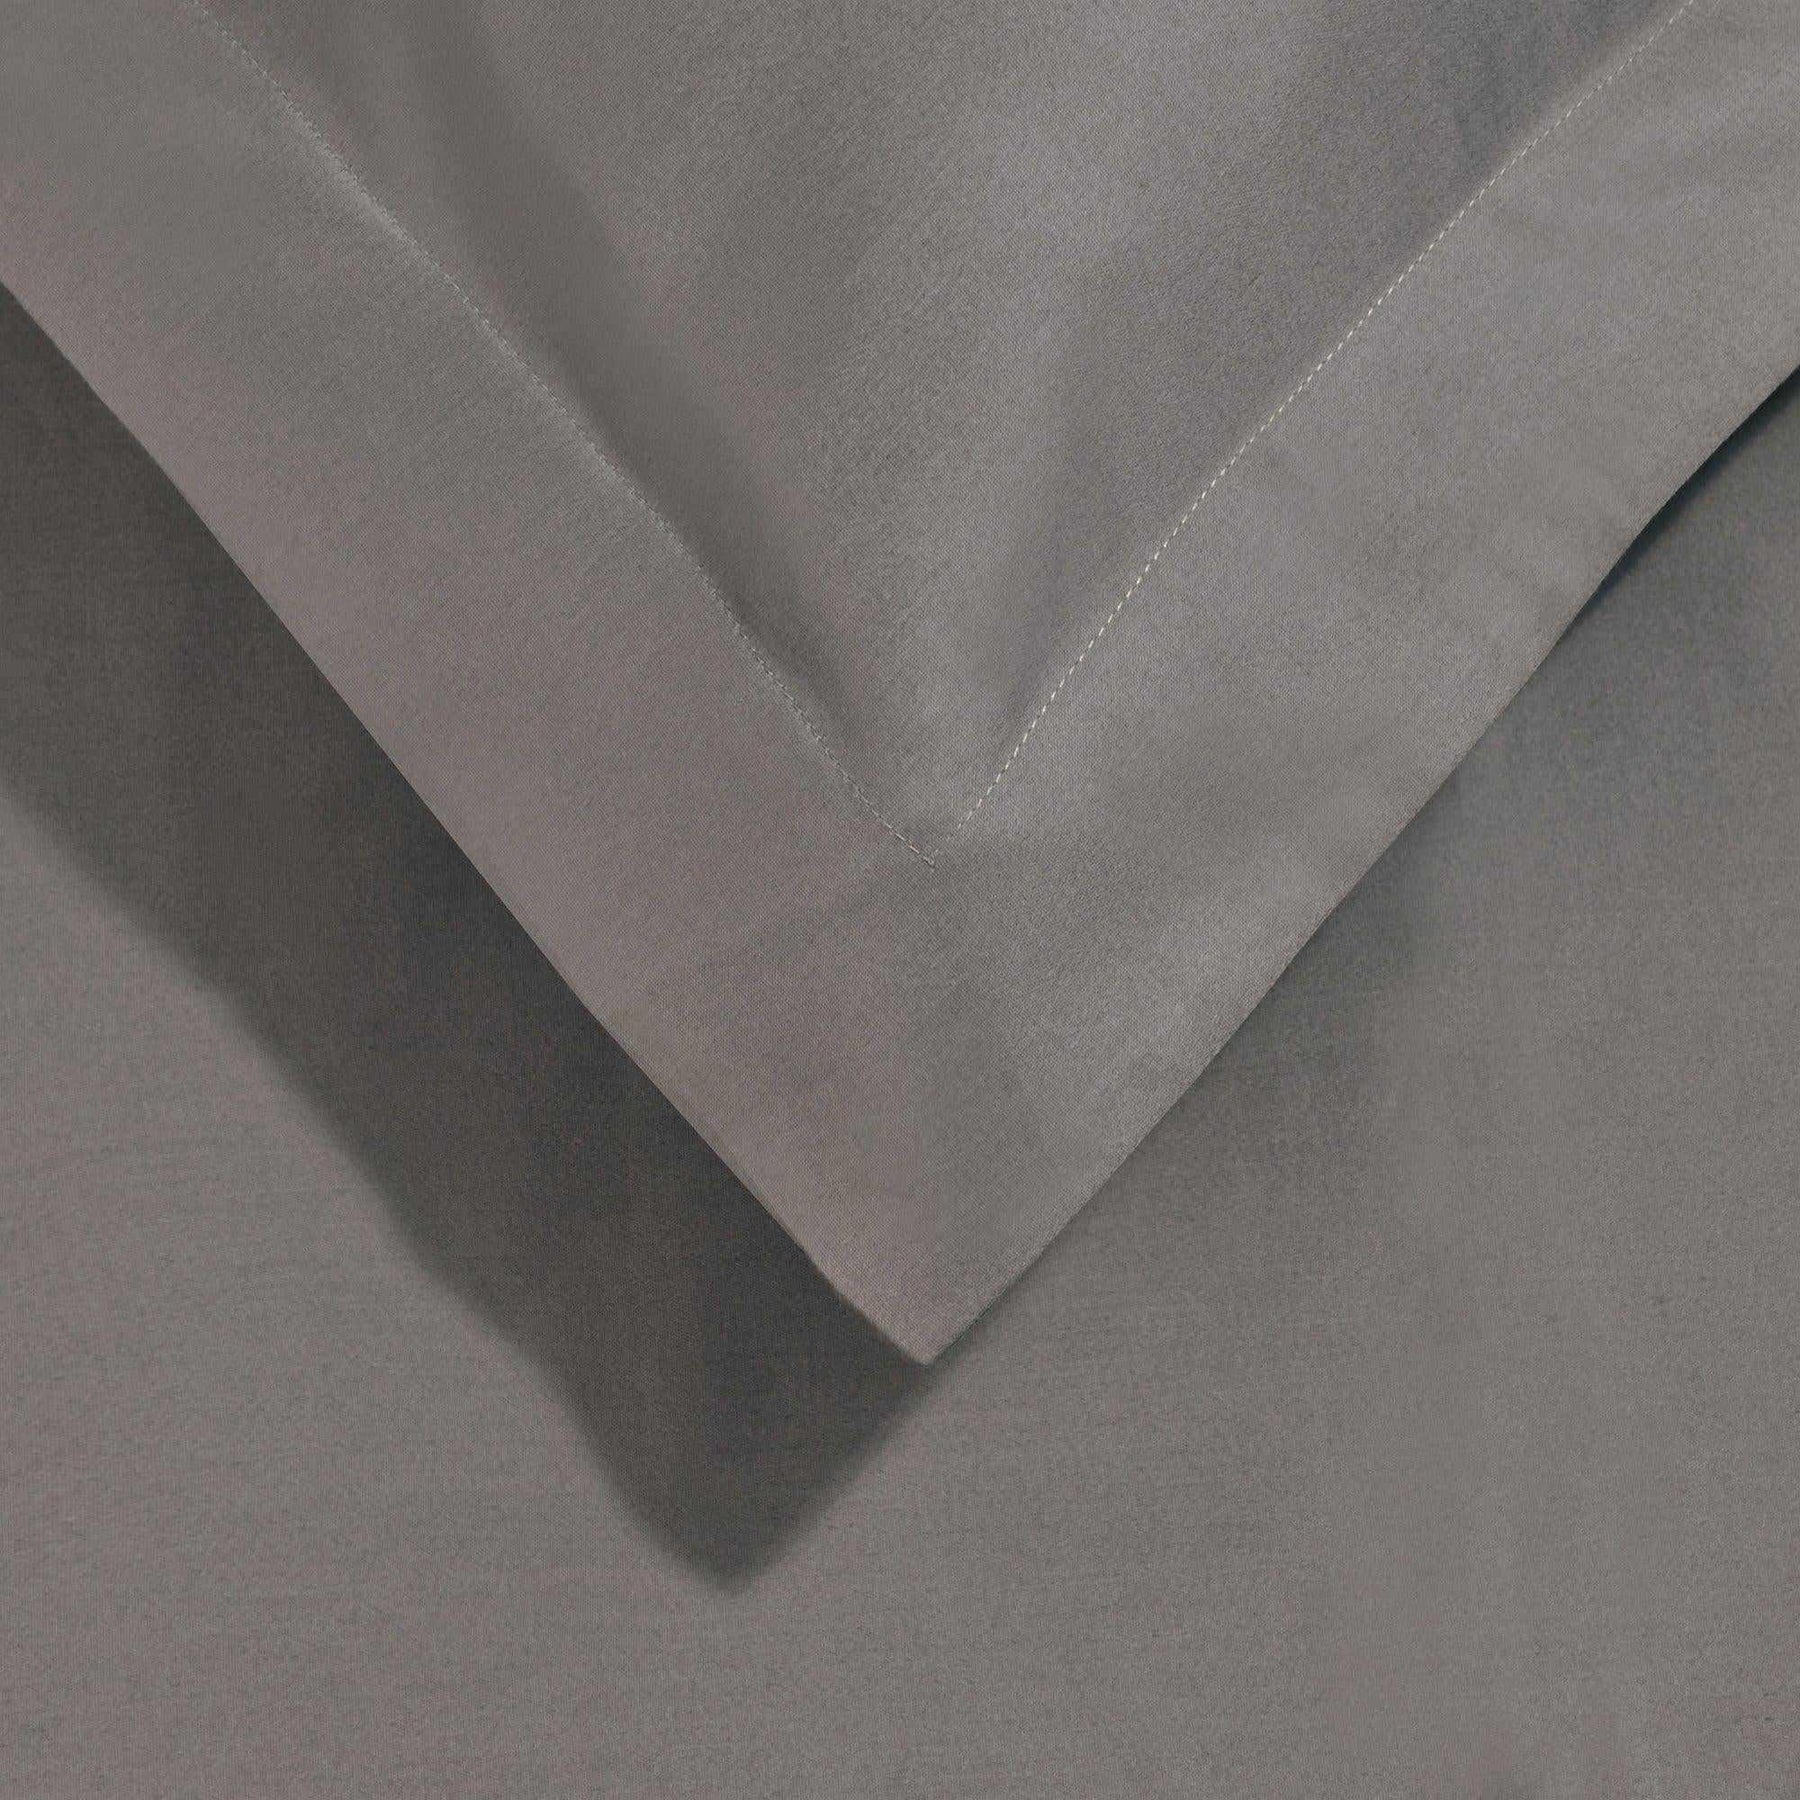  Superior Egyptian Cotton 700 Thread Count Breathable 3-Piece Duvet Cover Bedding Set - Grey